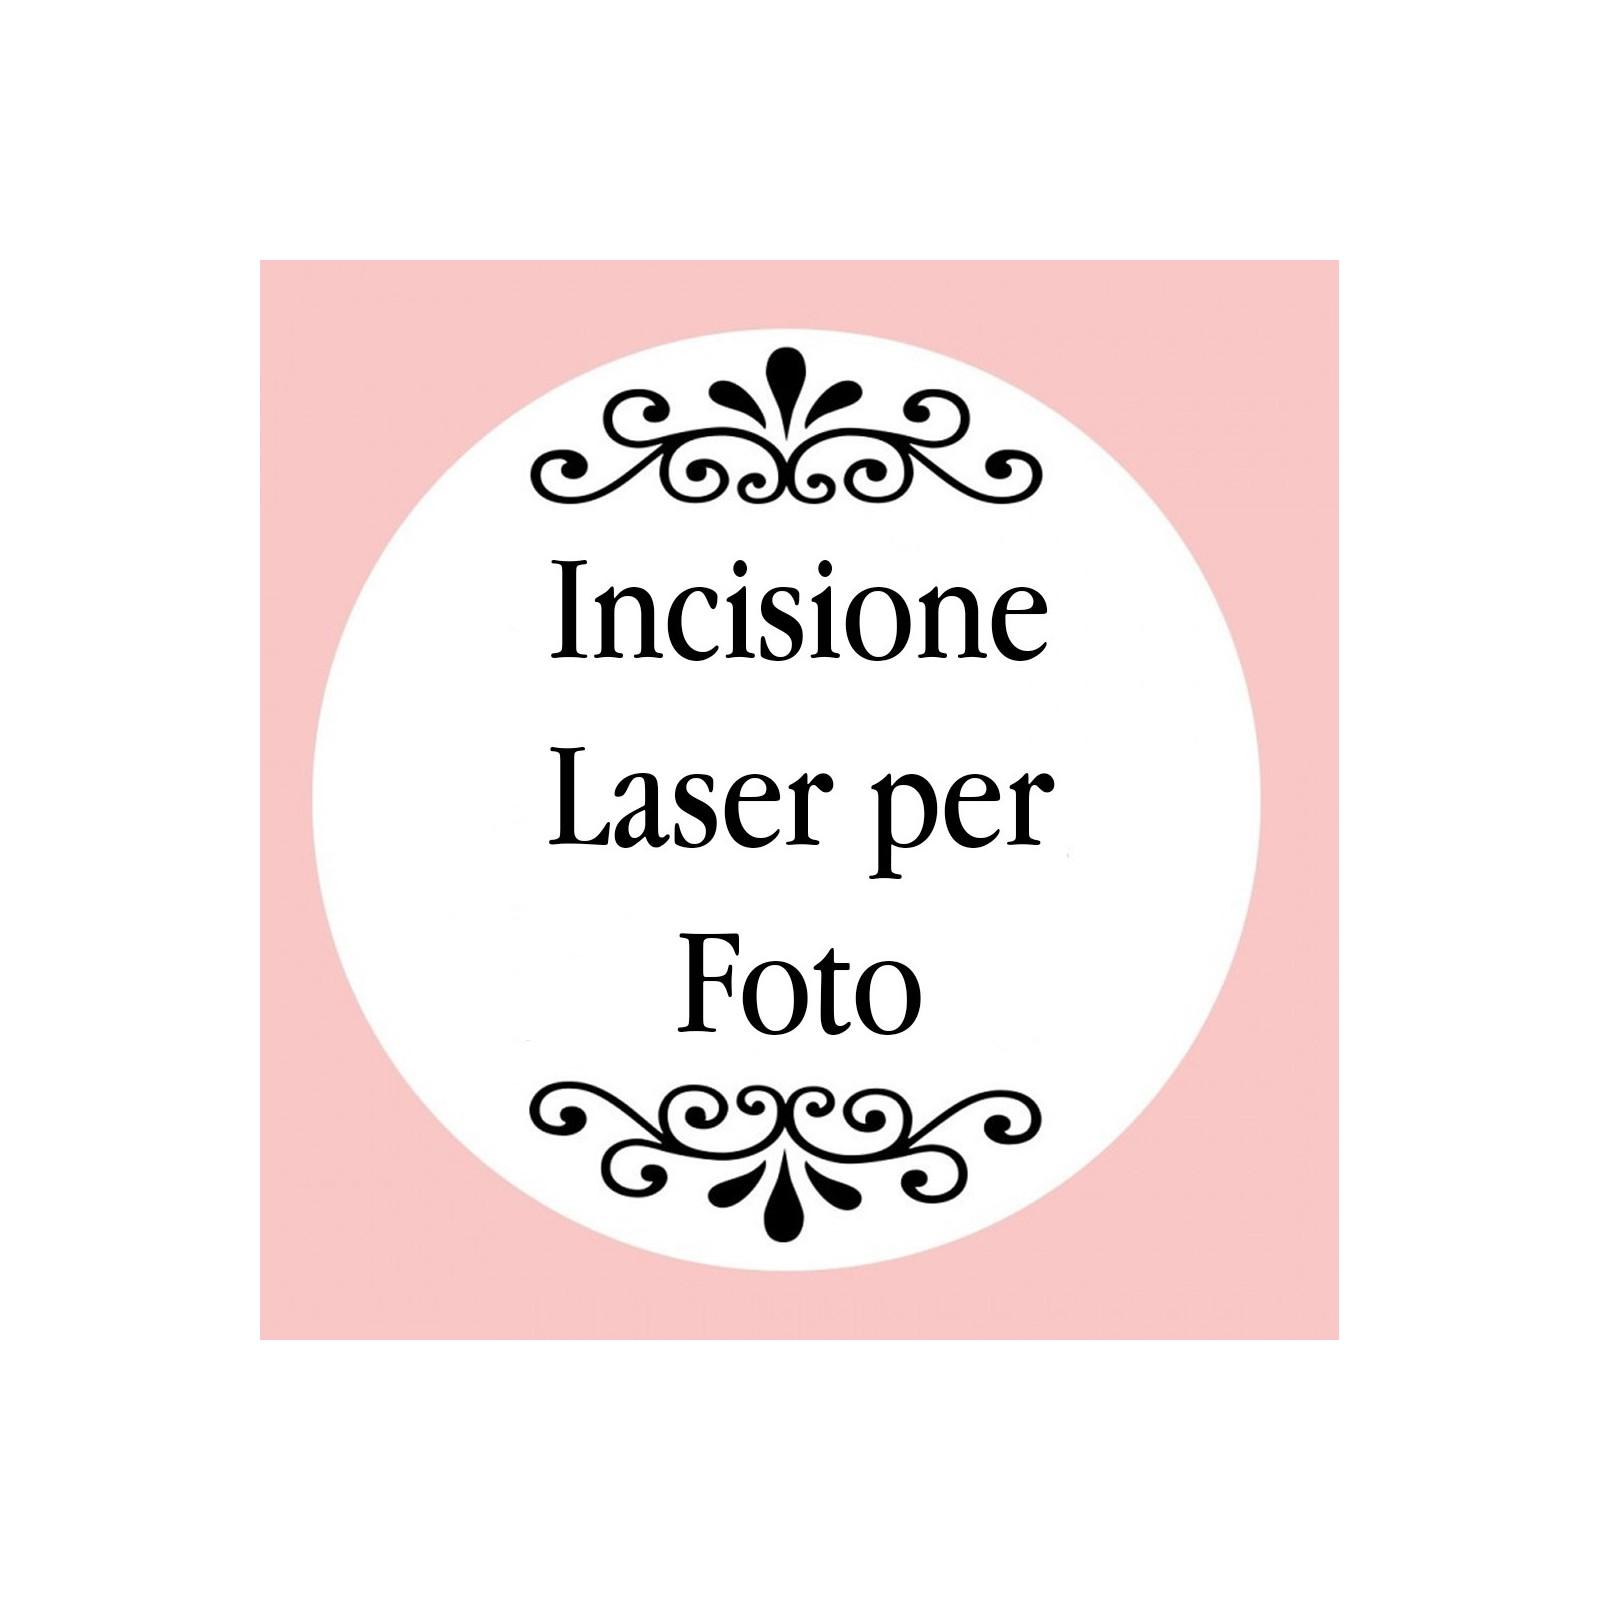 Registrazione laser per foto